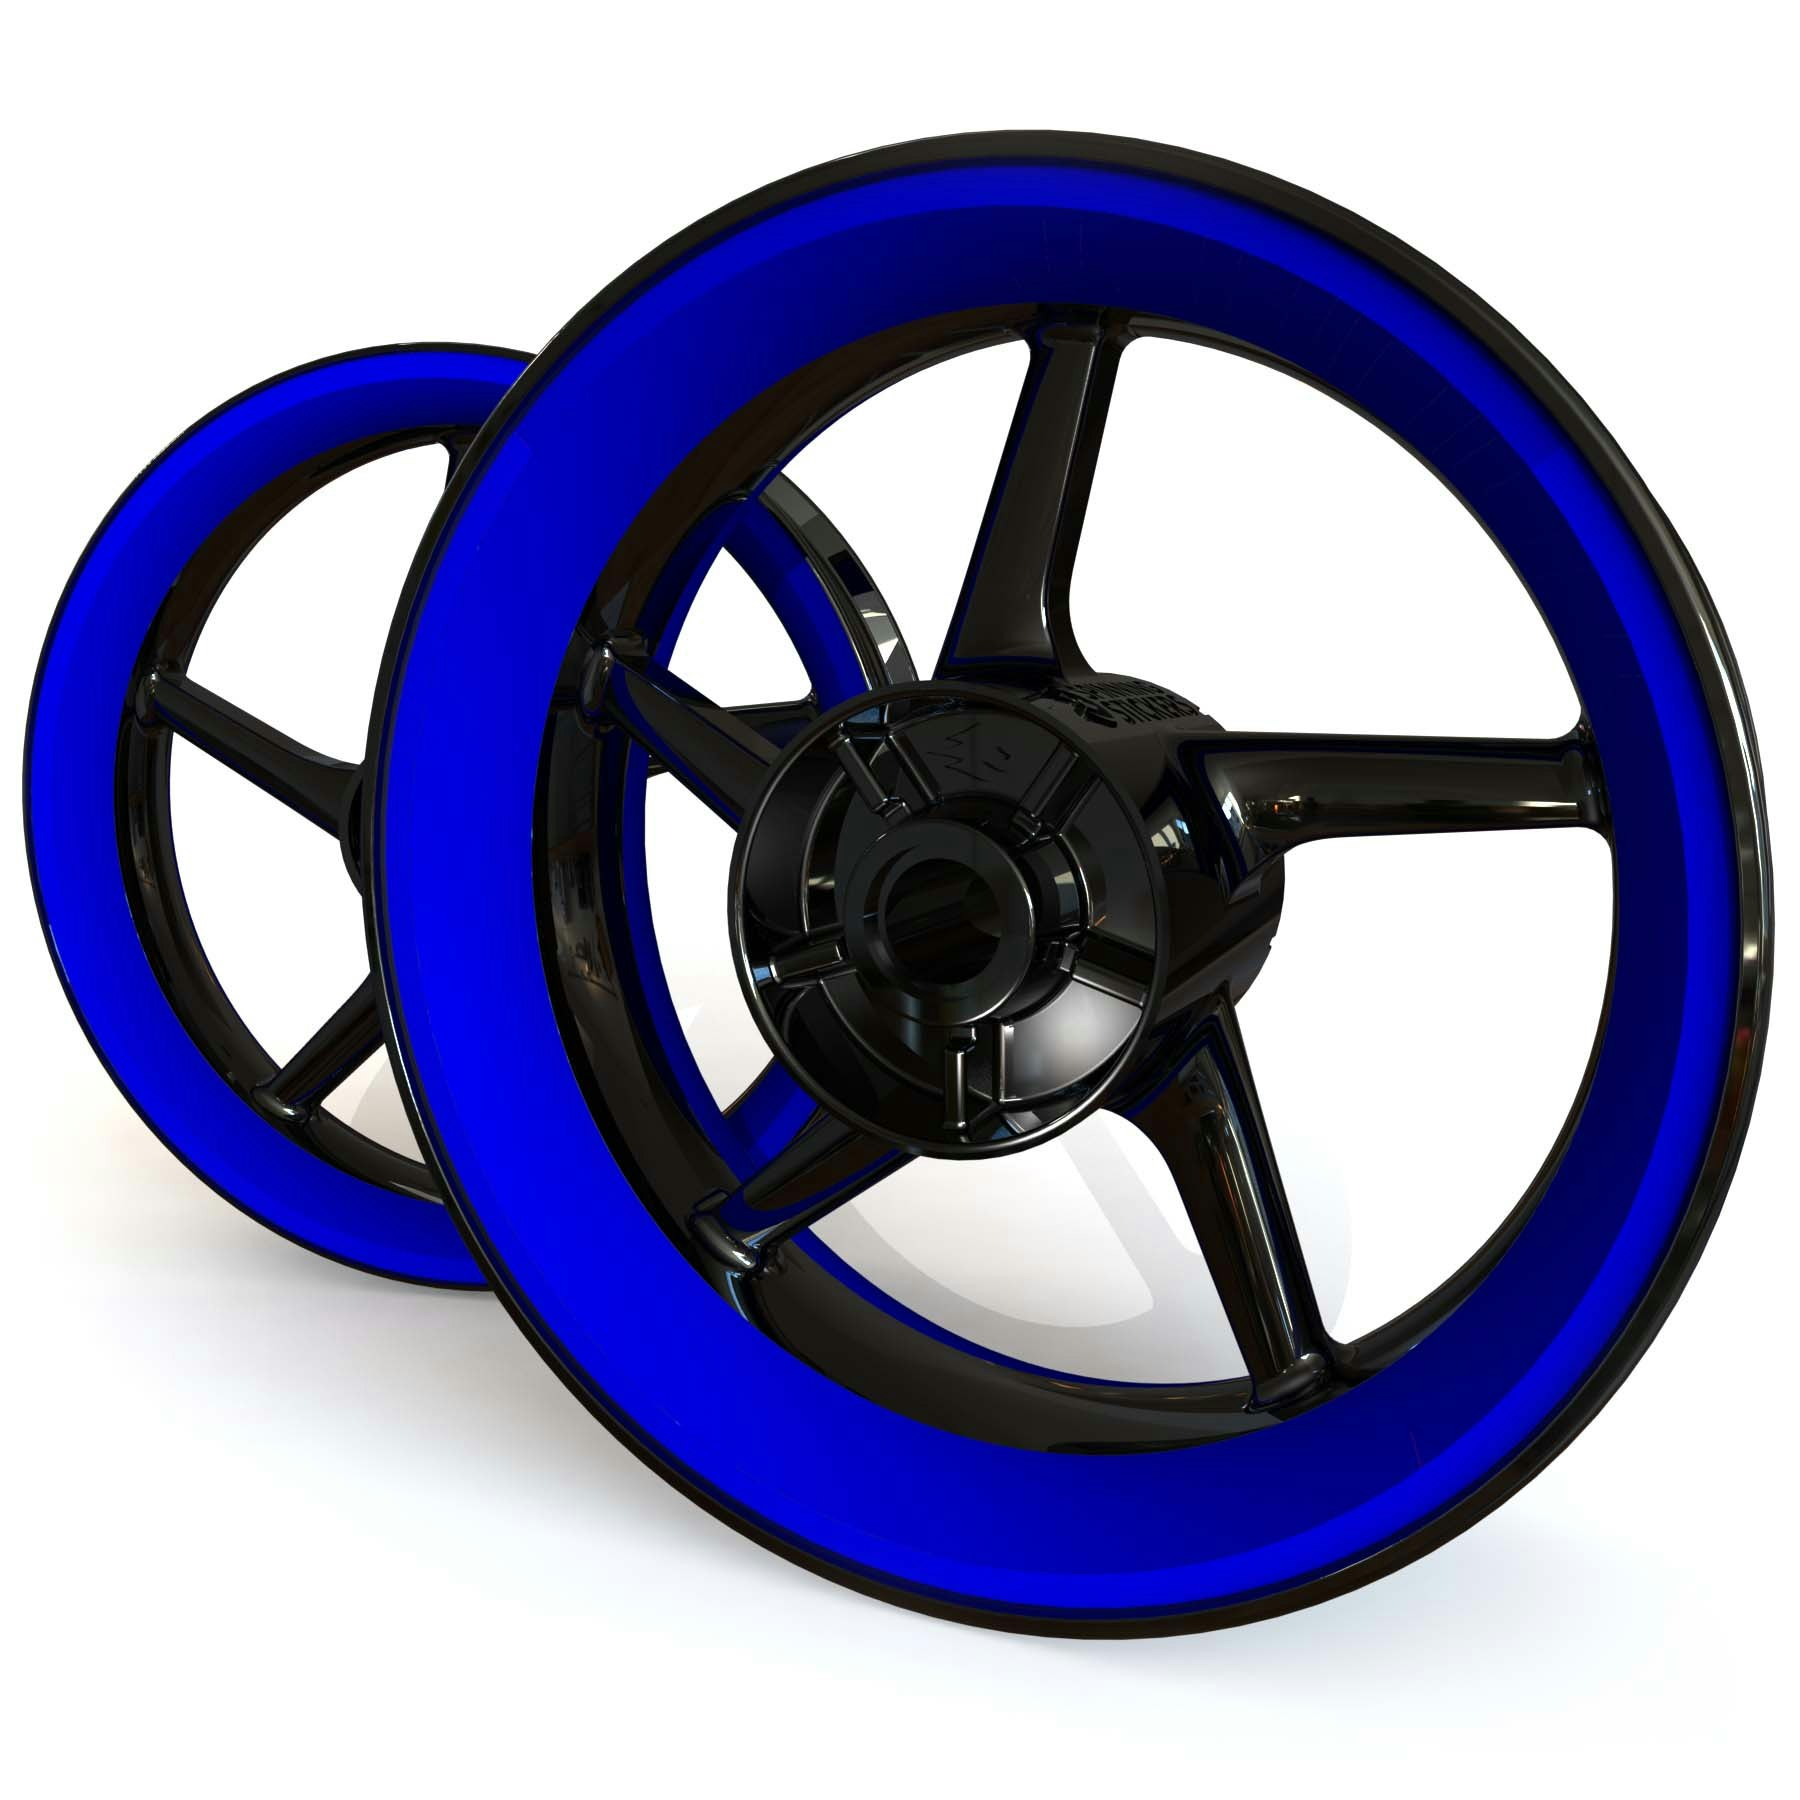 UniColor Wheel Stickers - Premium Design - SpinningStickers